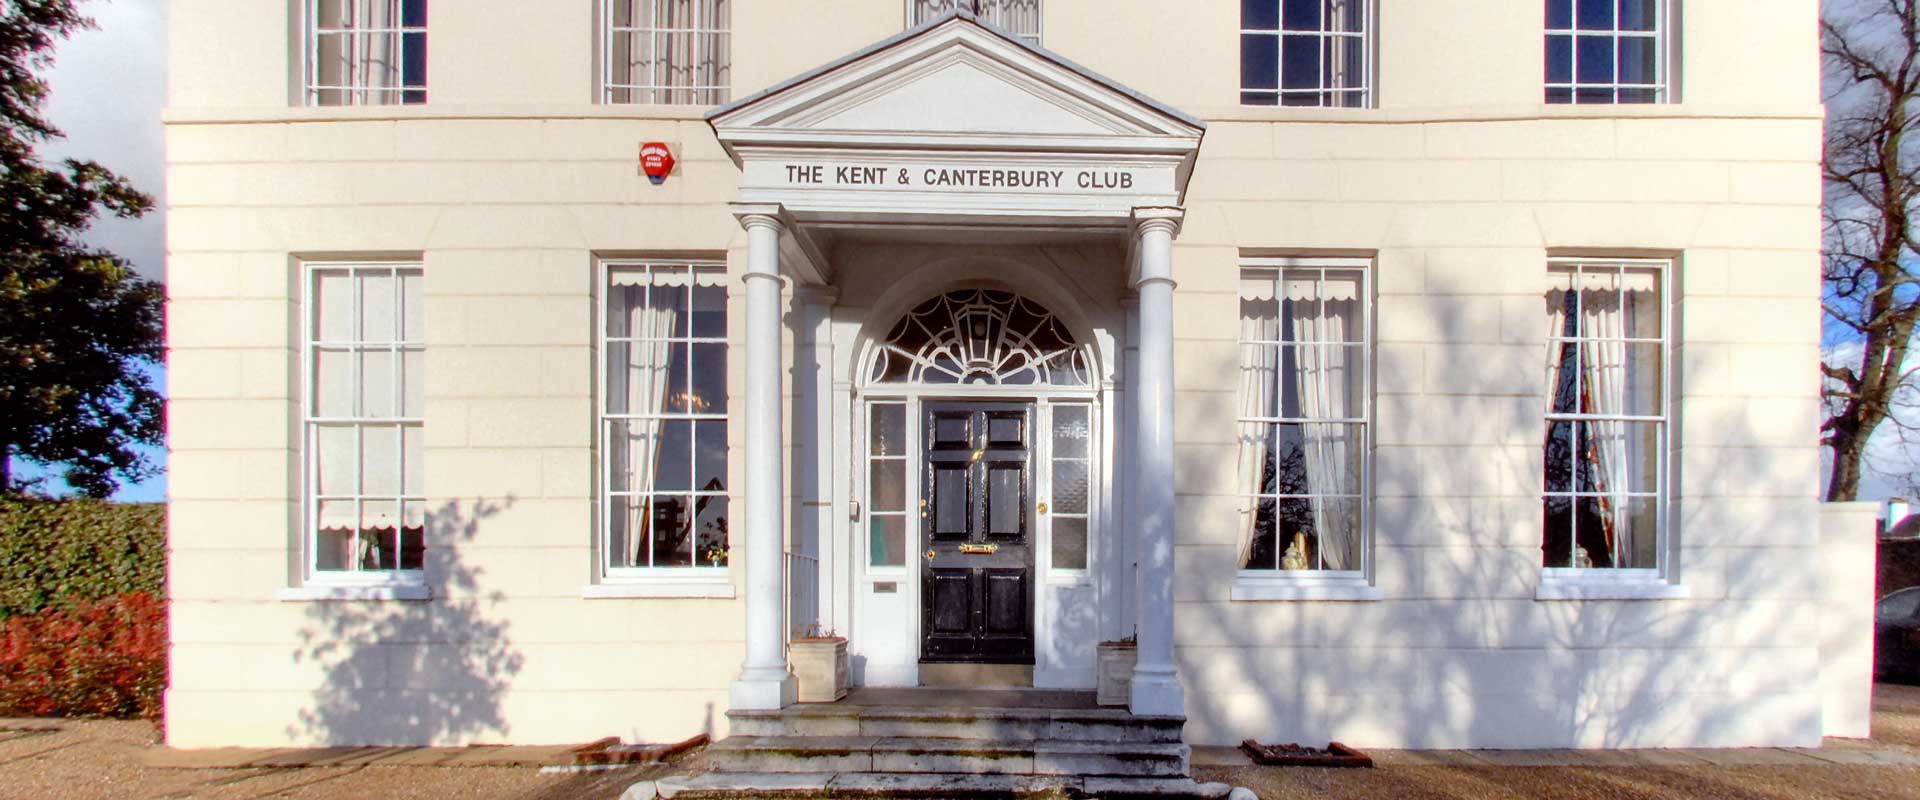 Kent & Canterbury Club